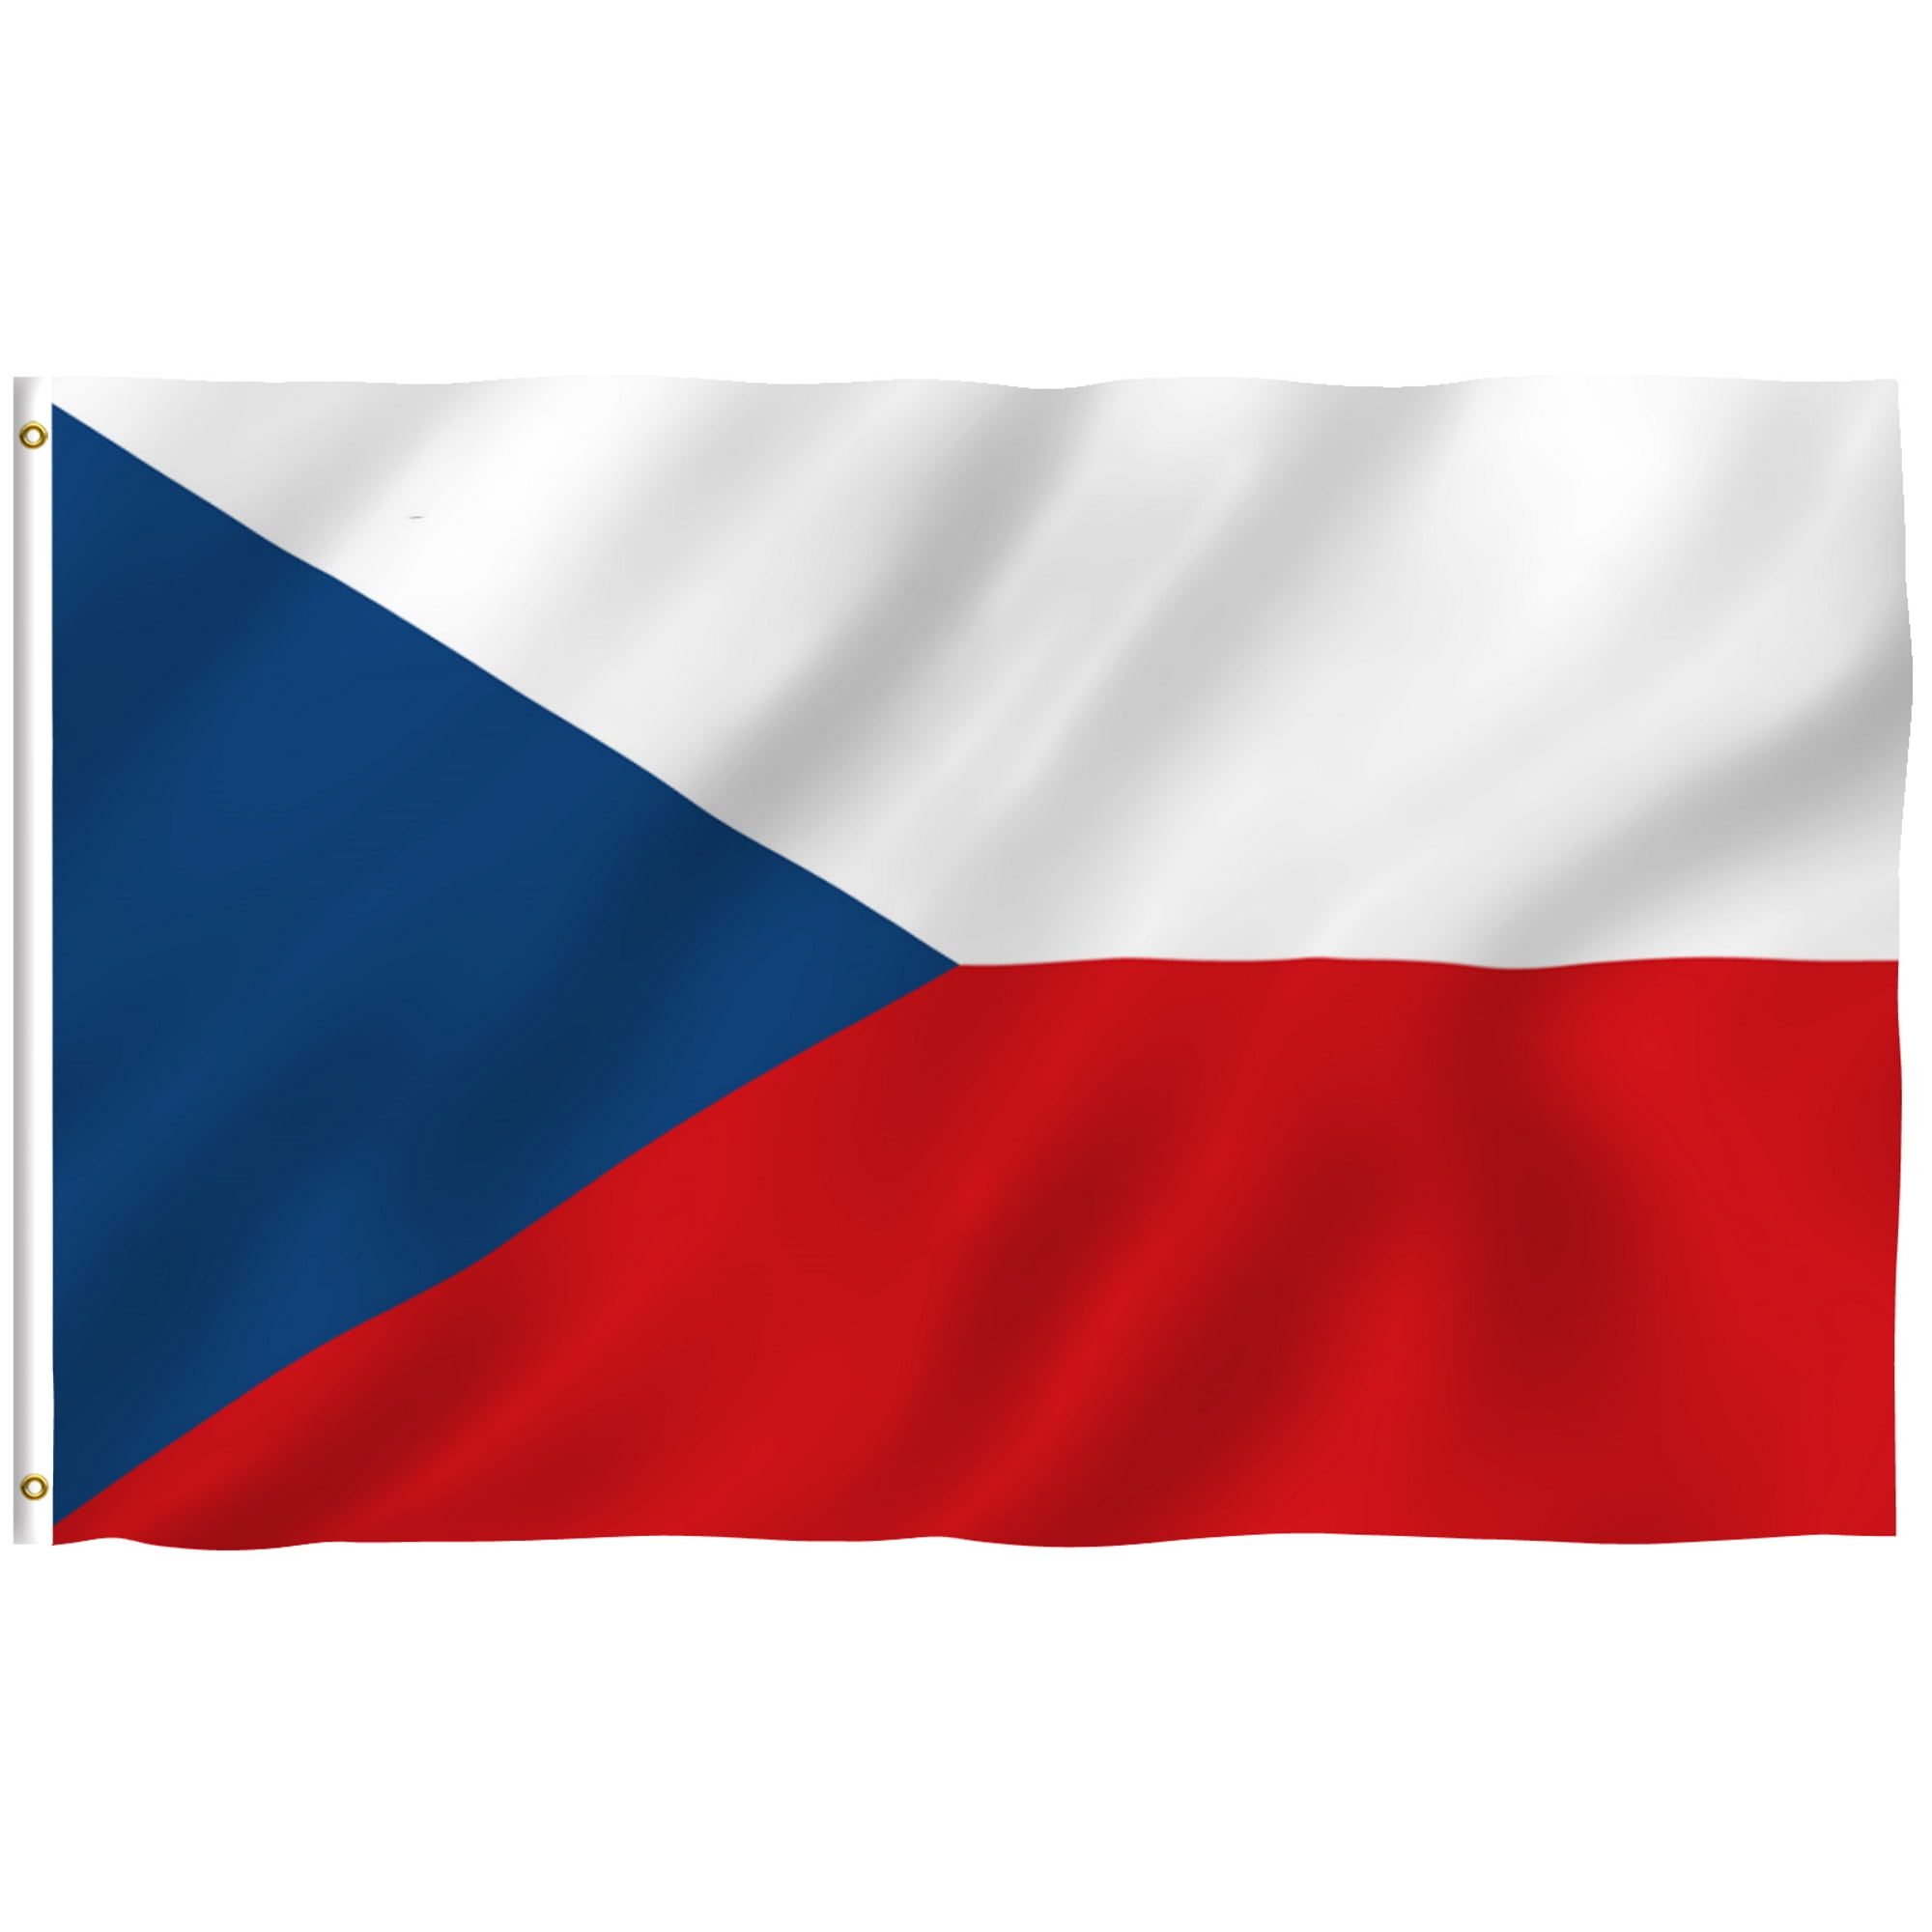 Czechia National Flags Polyester 3 X 5 Ft Anley Fly Breeze 3x5 Foot Czech Flag 